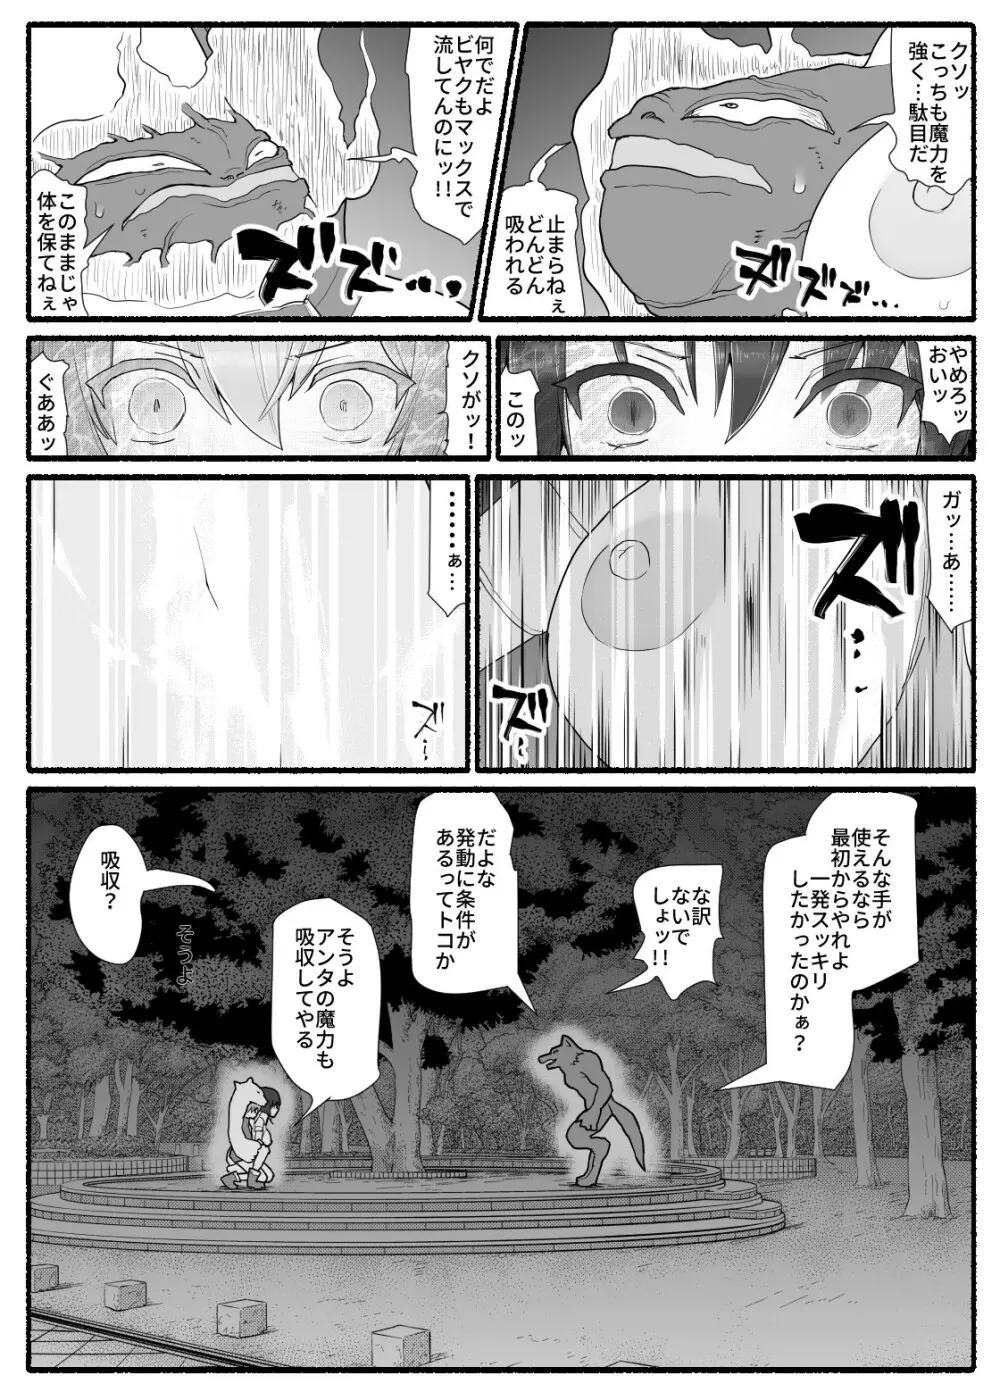 魔法少女vs淫魔生物 14 23ページ